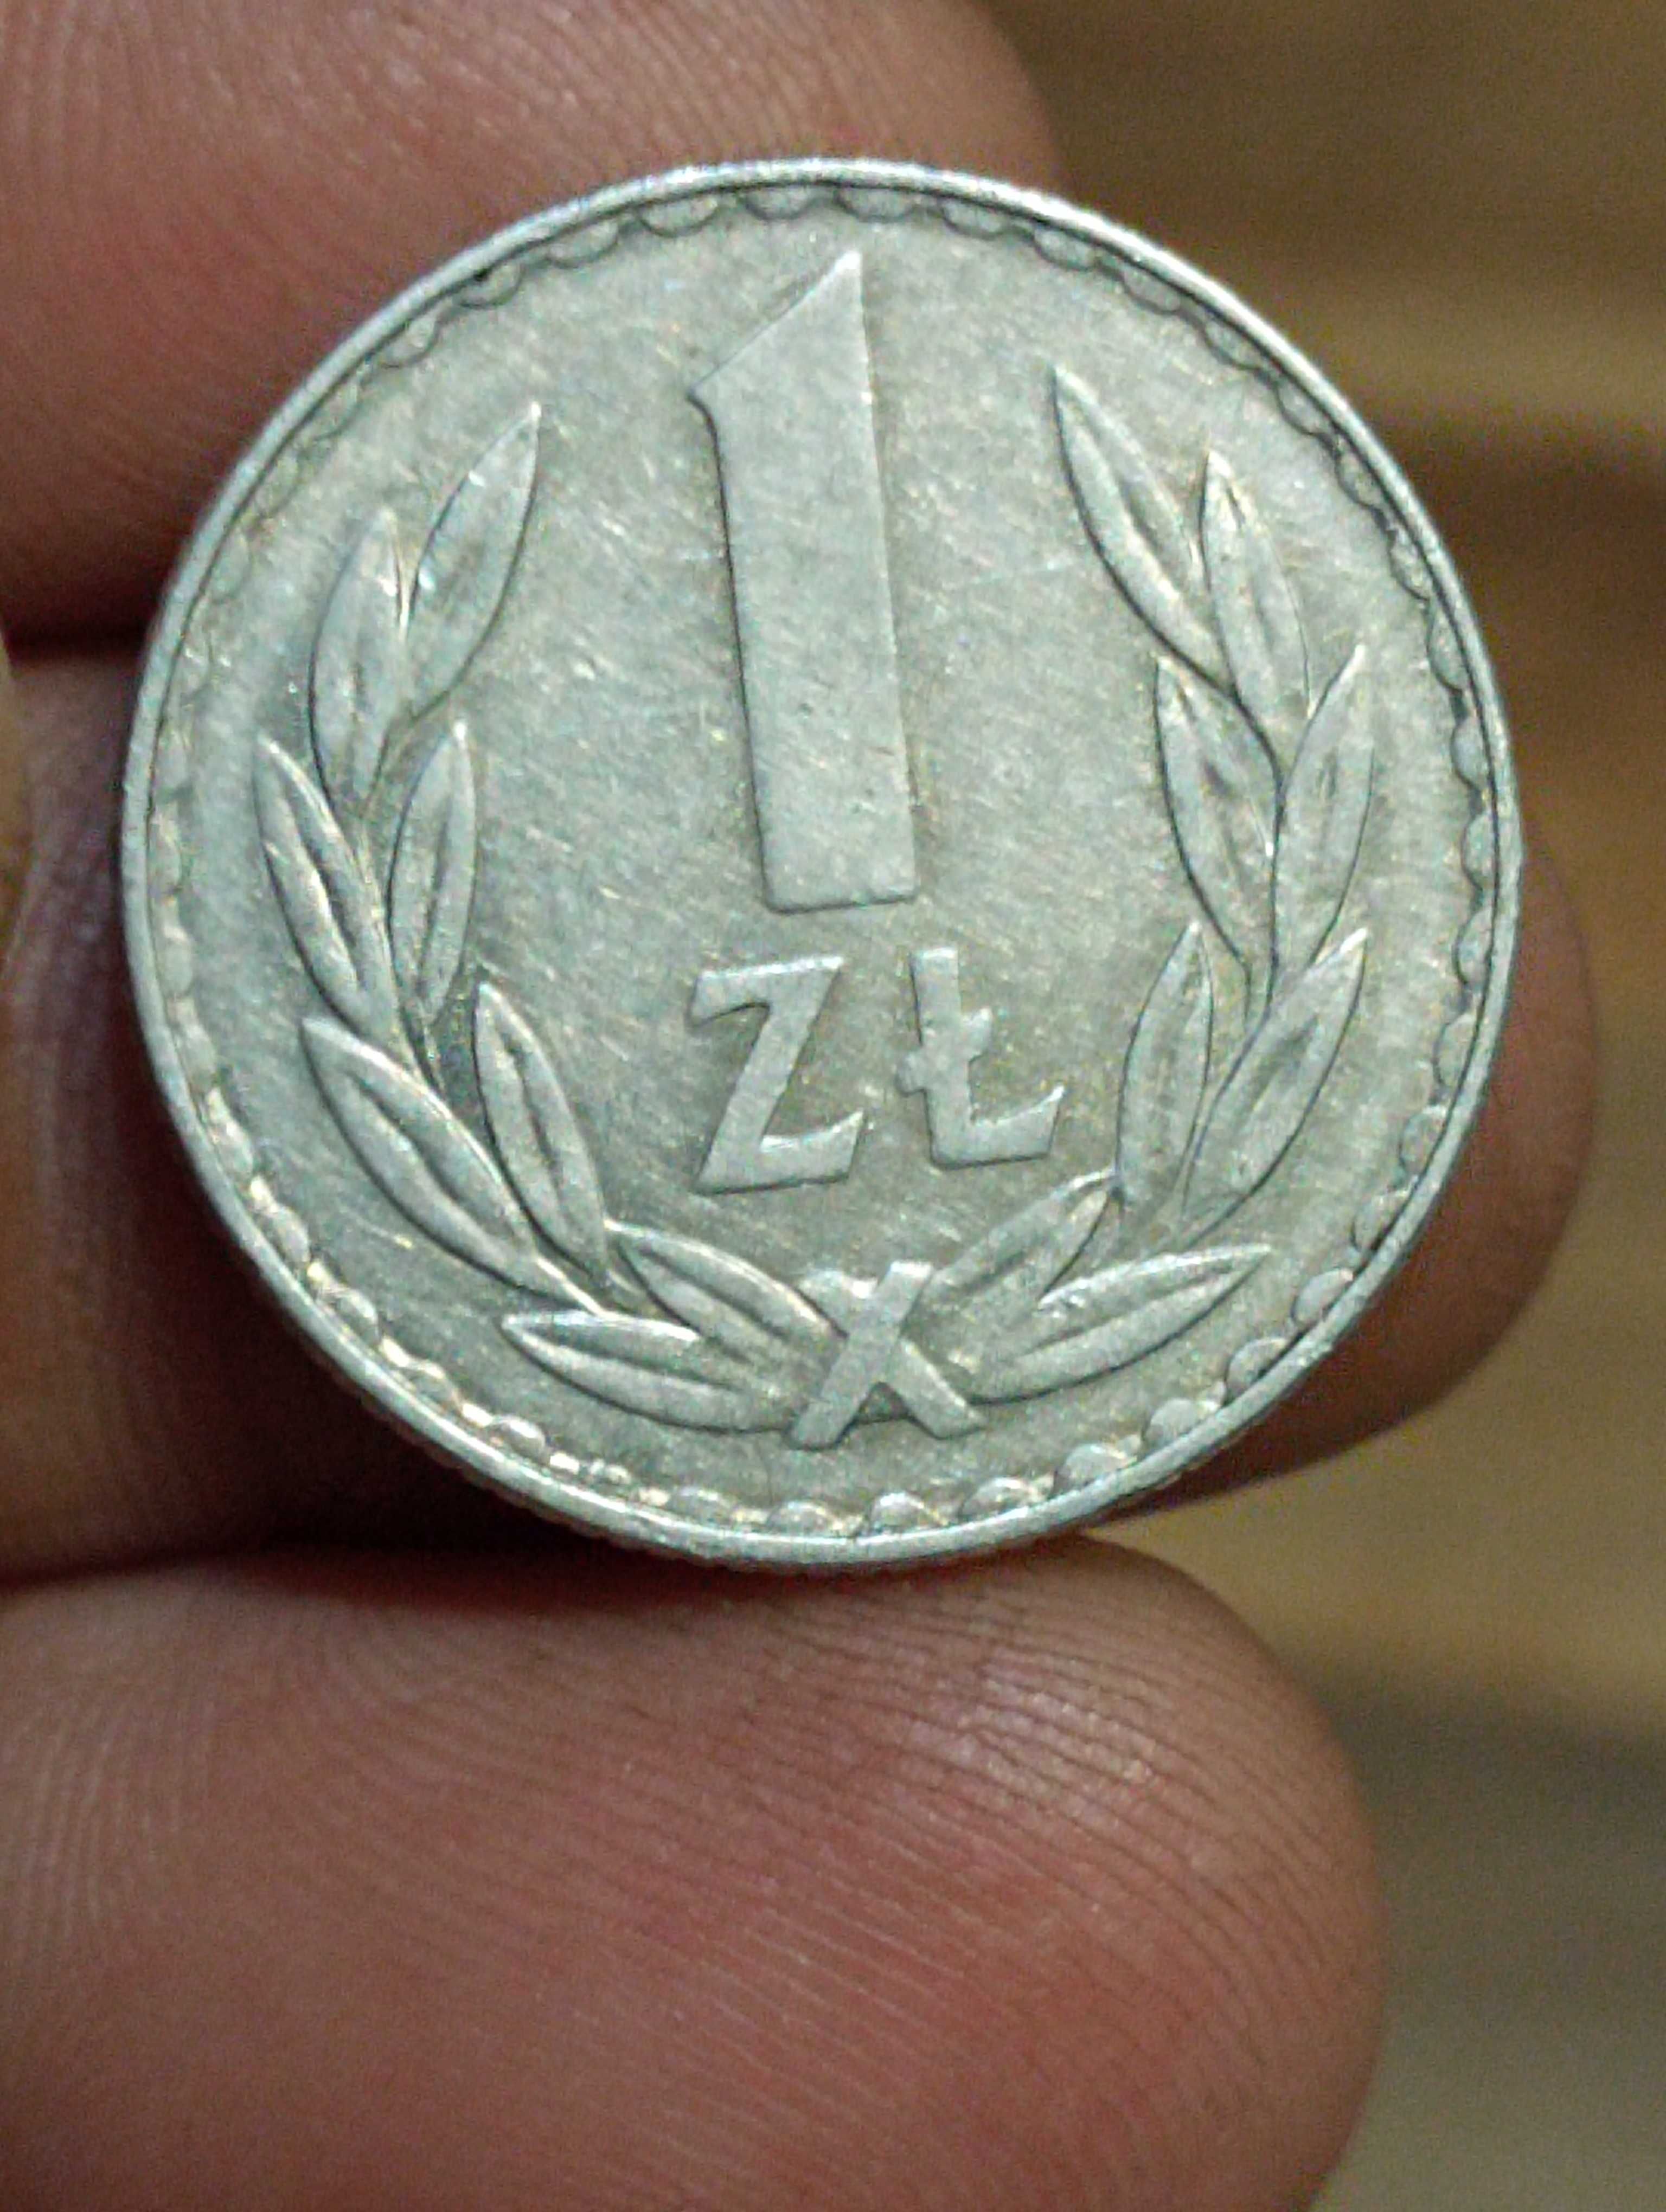 Sprzedam monete druga 1 zloty 1980 rok